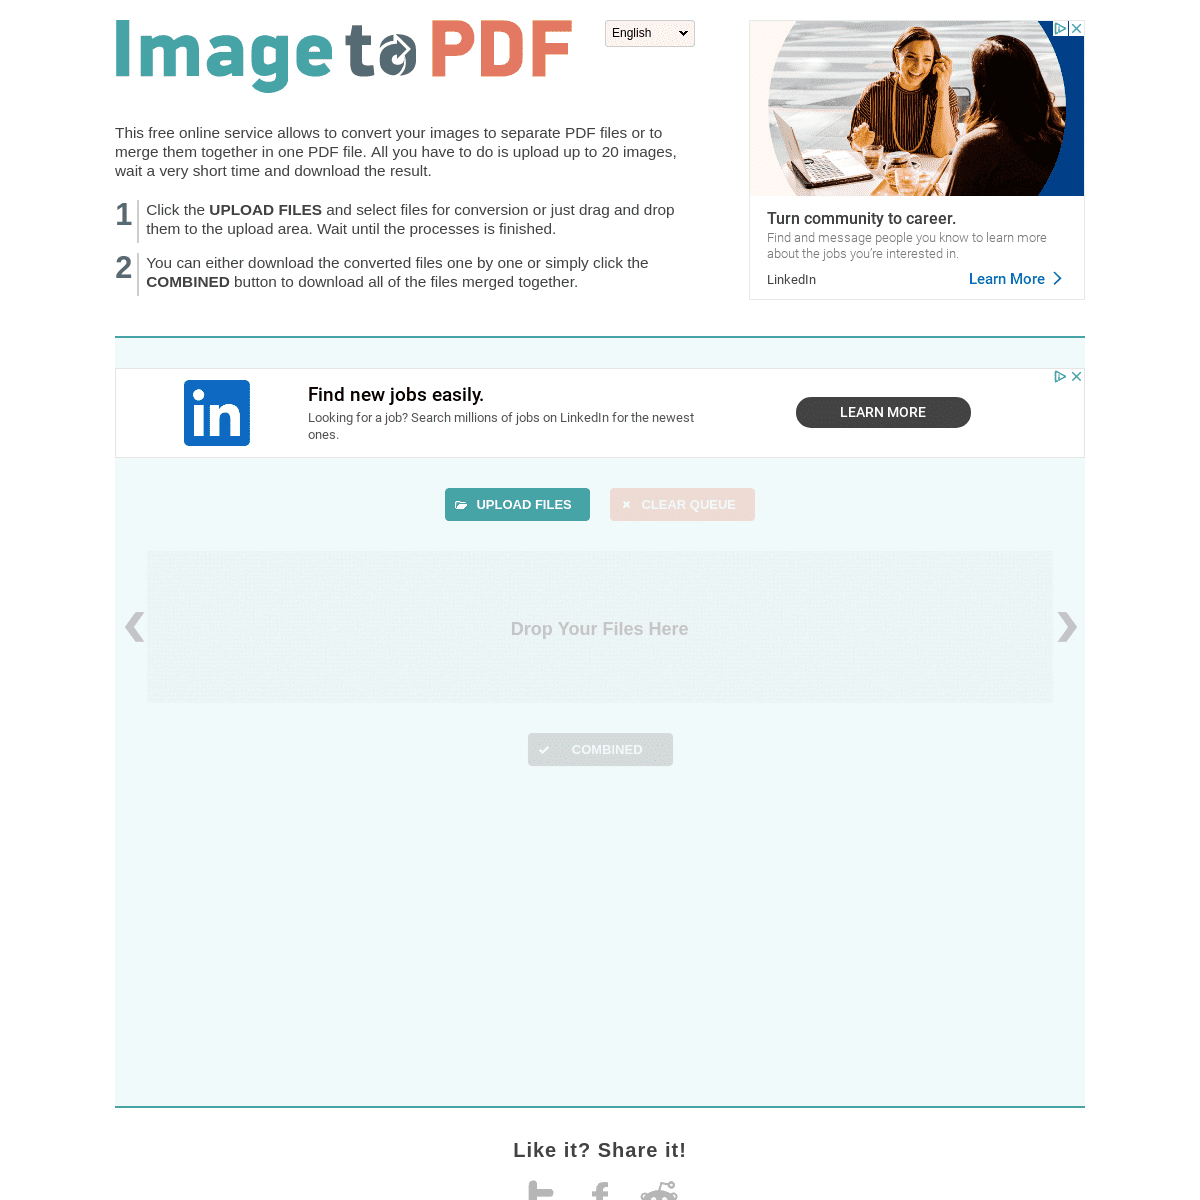 A complete backup of imagetopdf.com